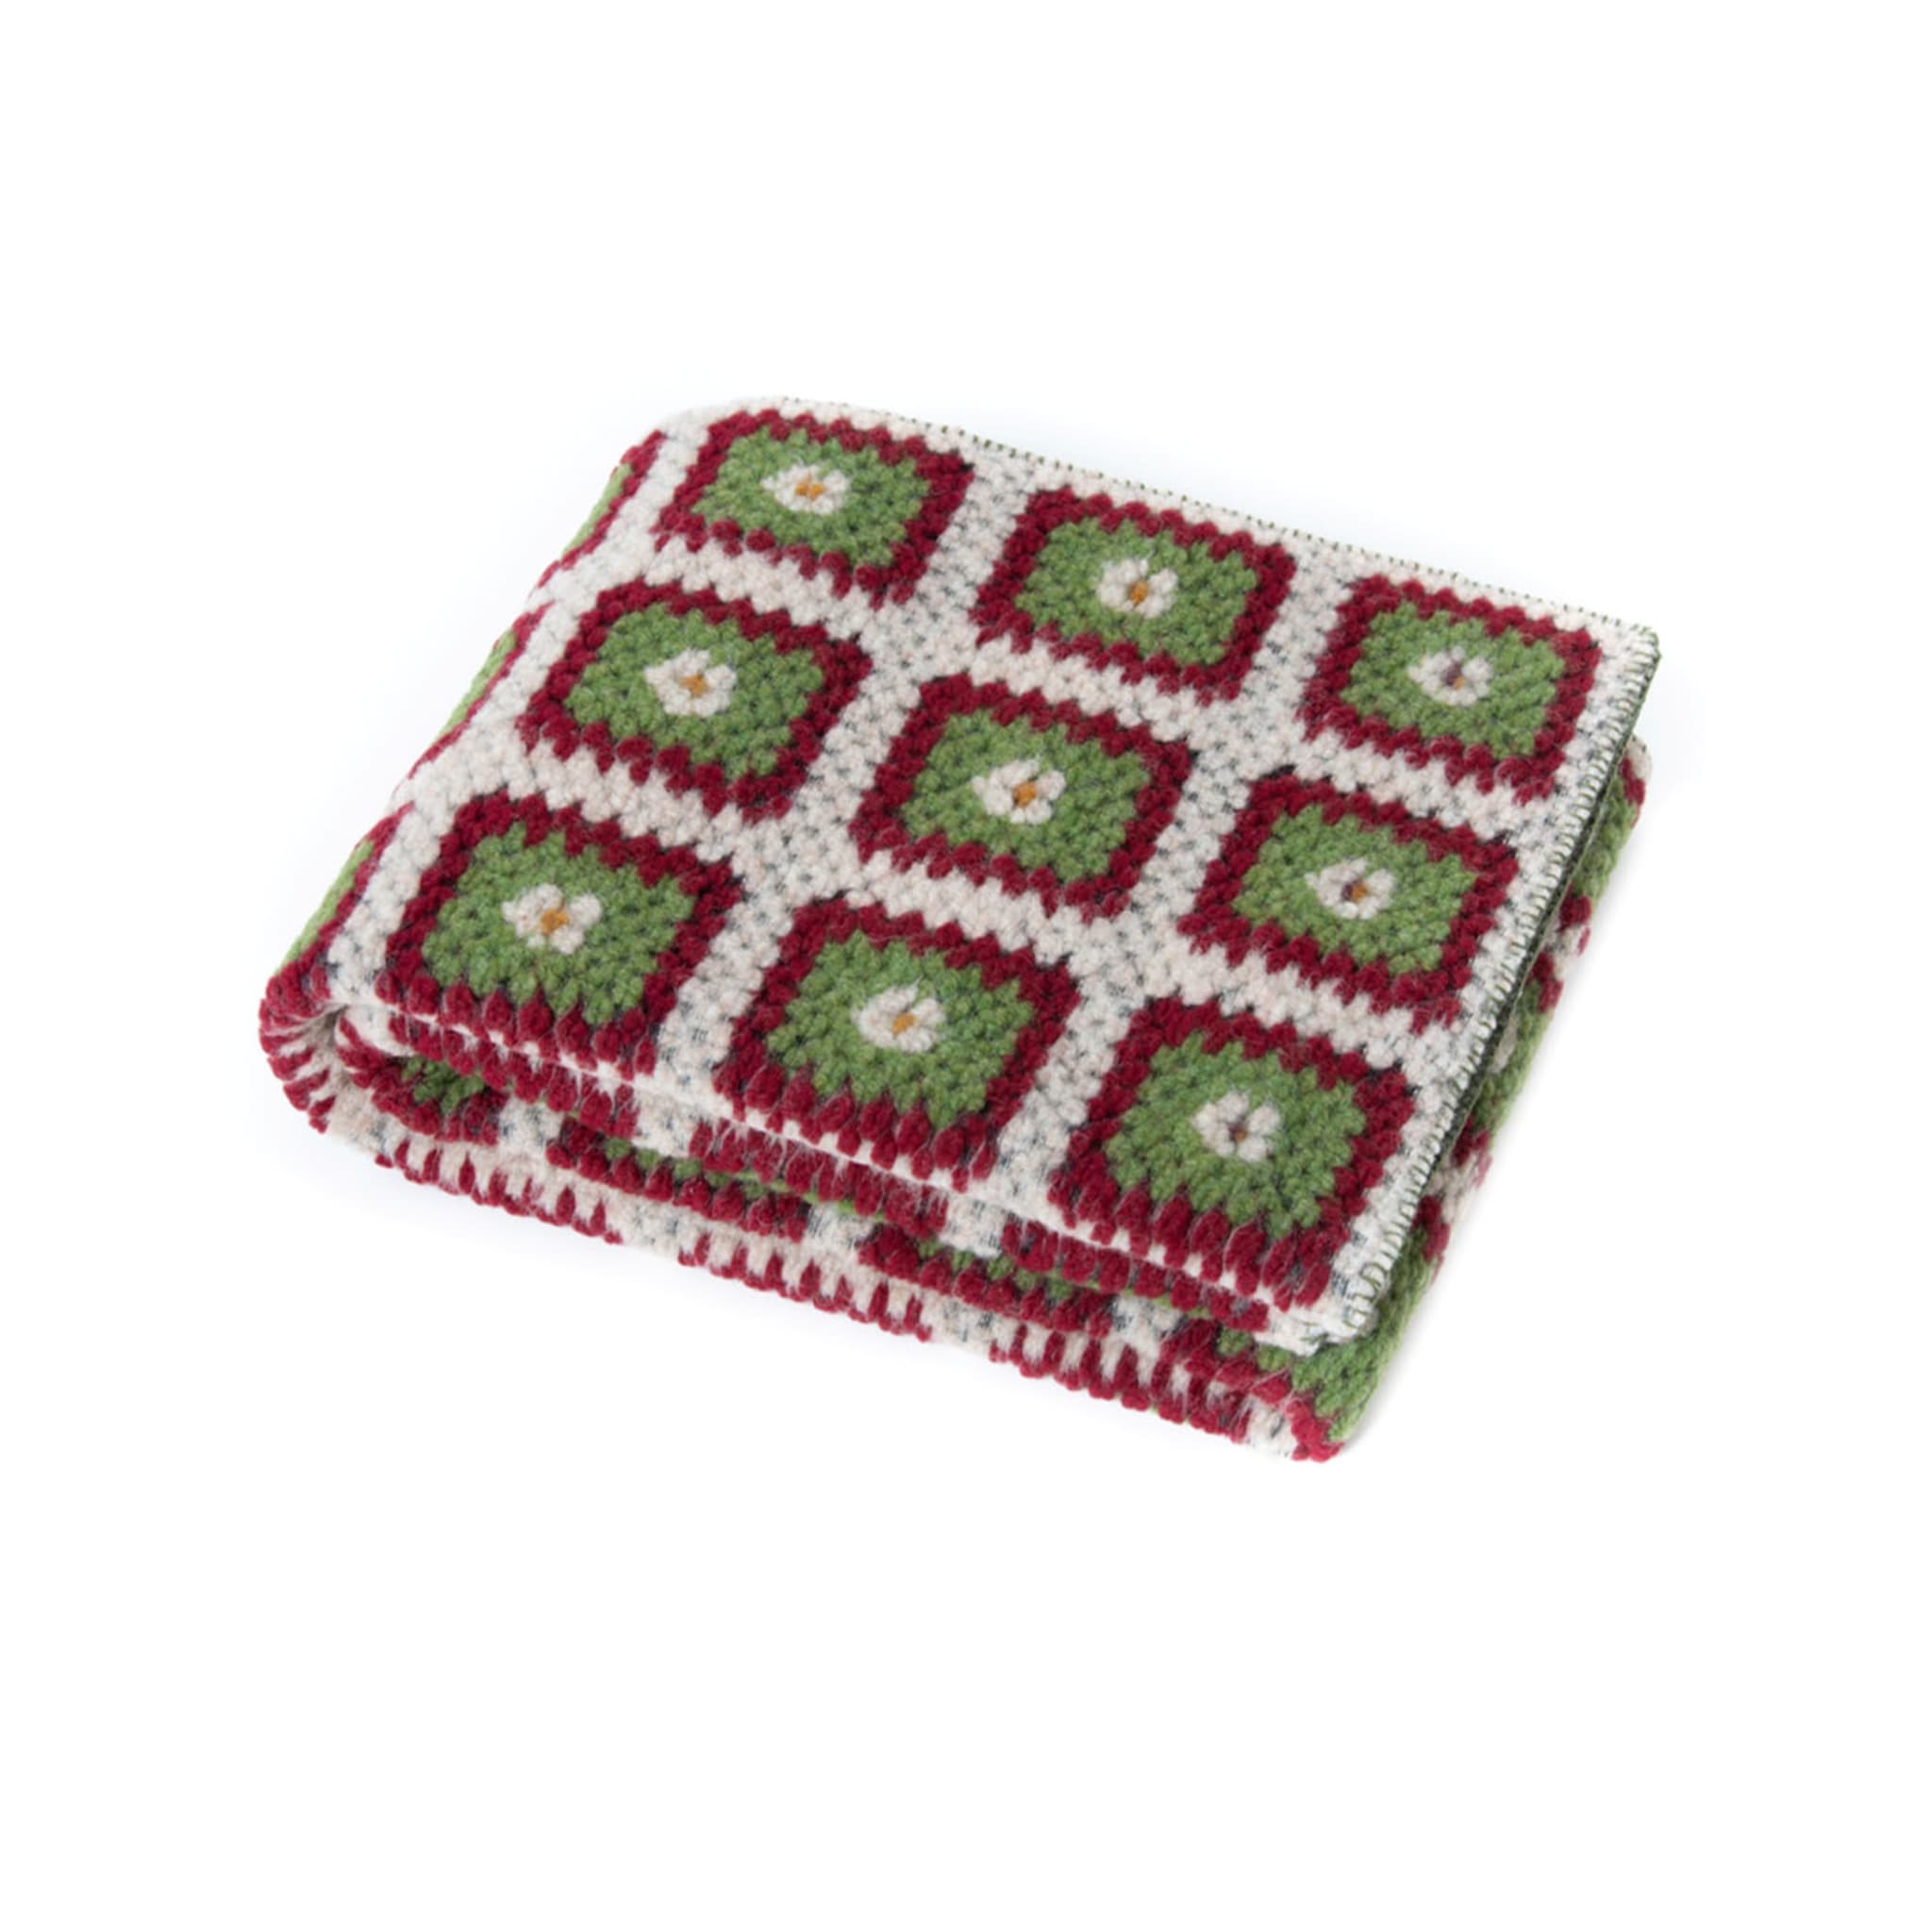 Shabby Green Crochet Blanket - Alternative view 1